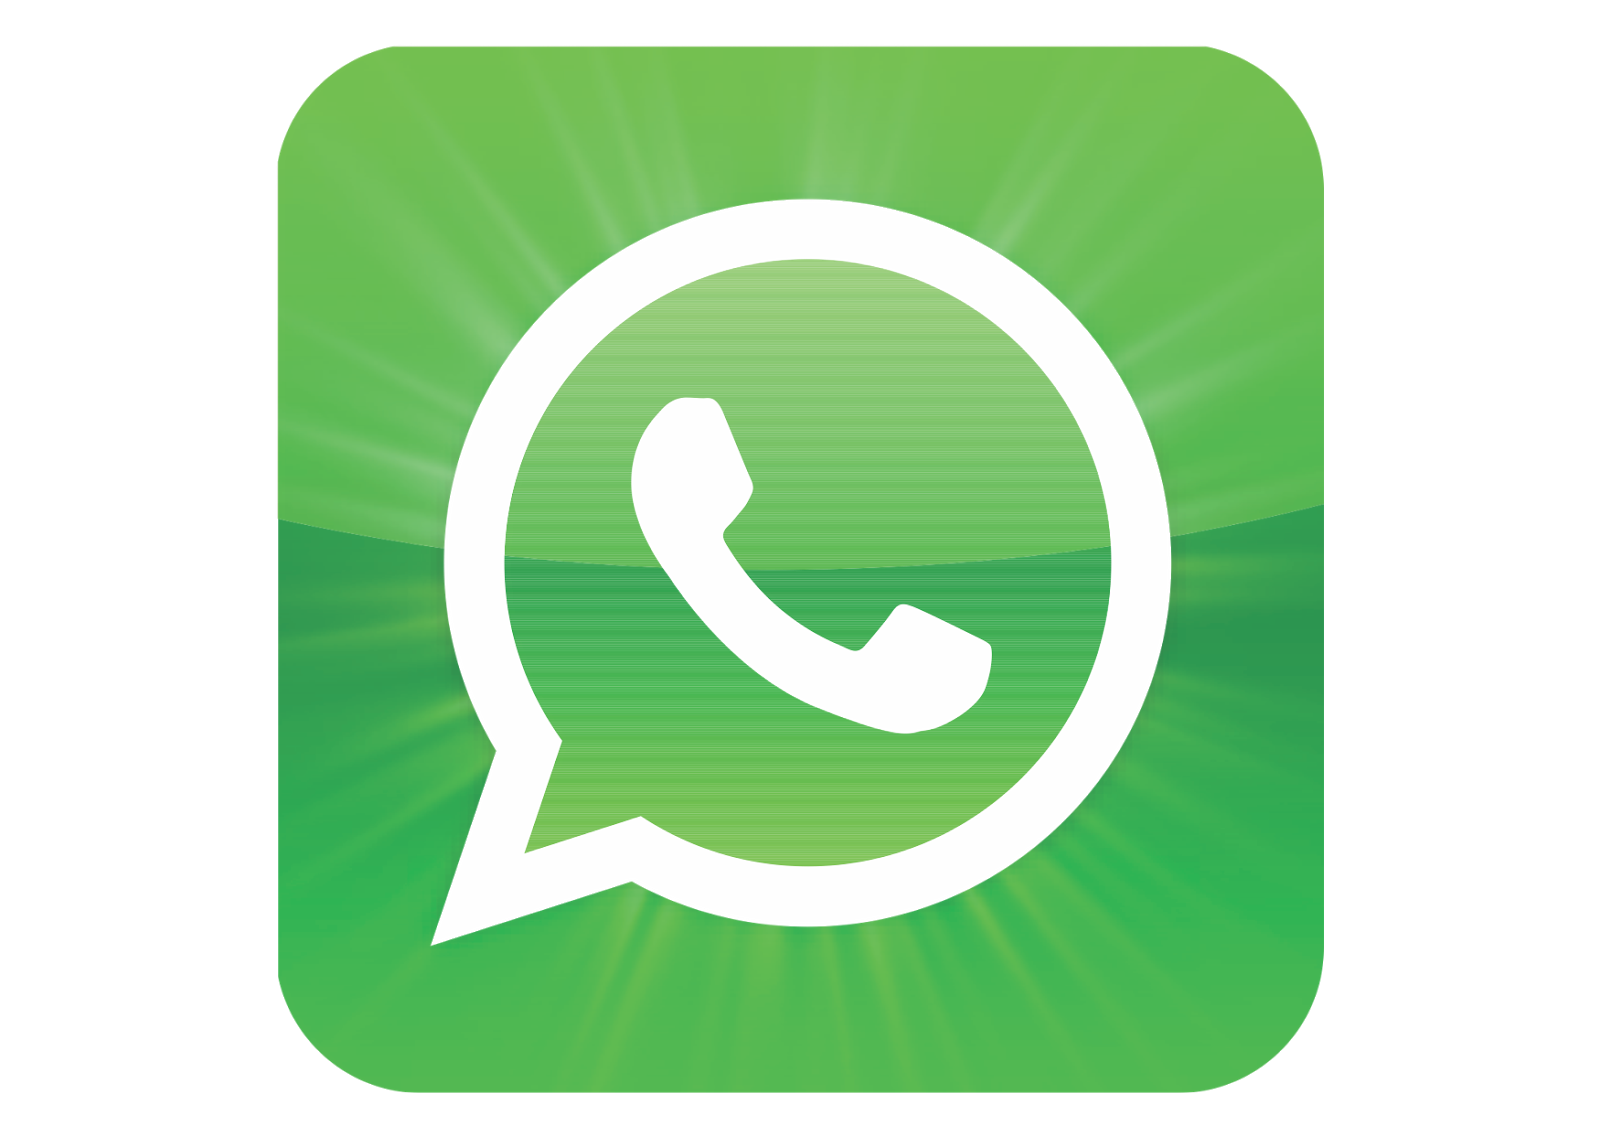 whatsapp-logo-cdr-whatsapp-logo-png-png-download-1600-1136-free